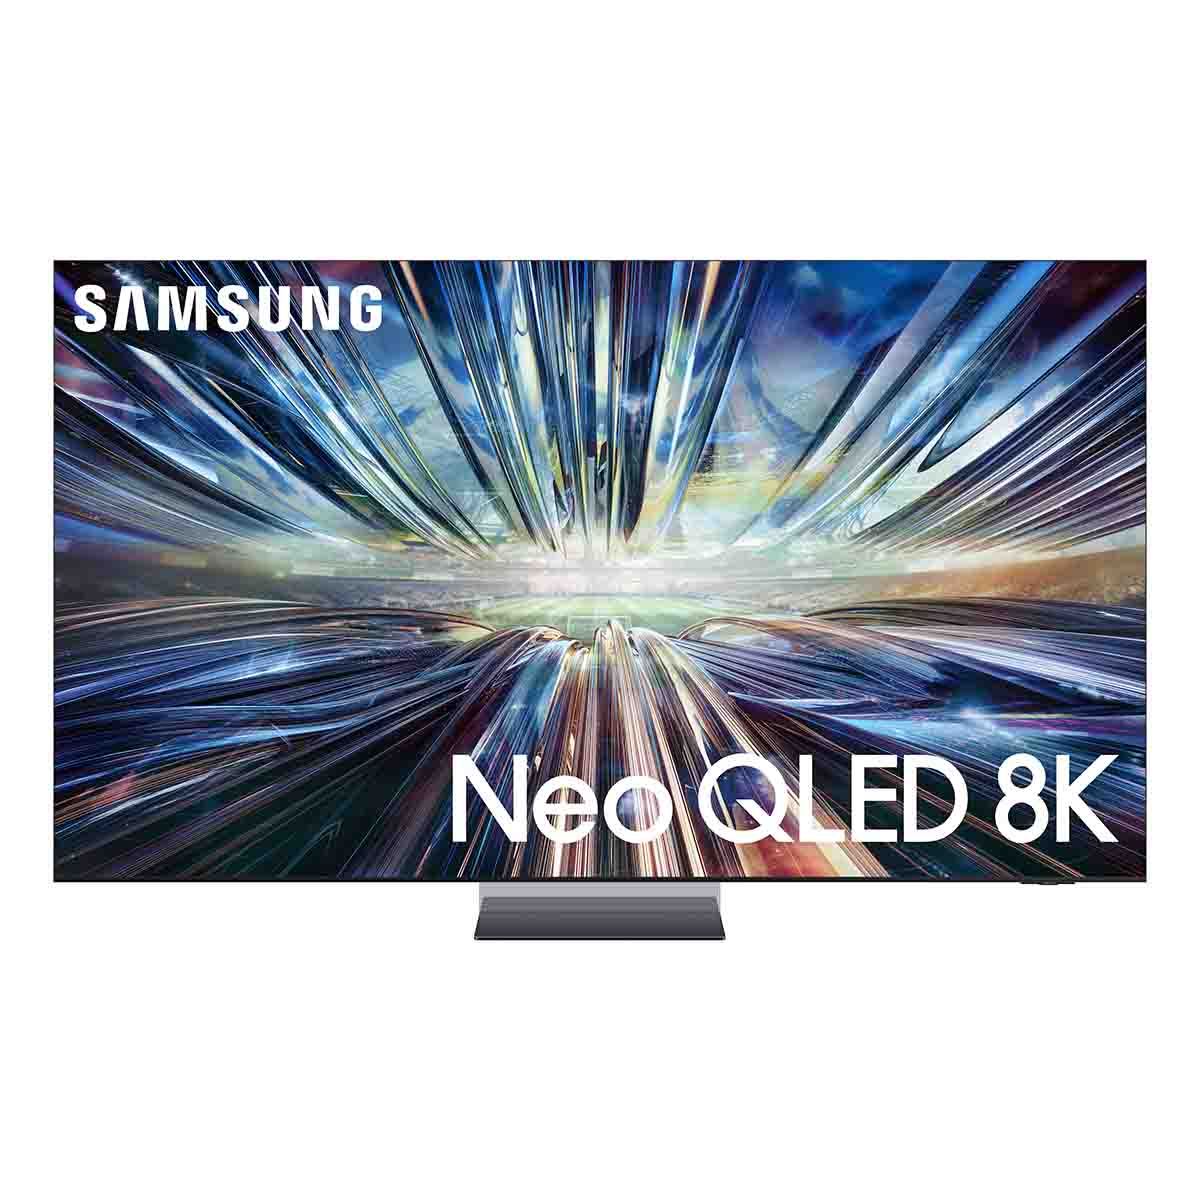 Samsung QN900D Neo QLED 8K Smart TV - 75" - front view